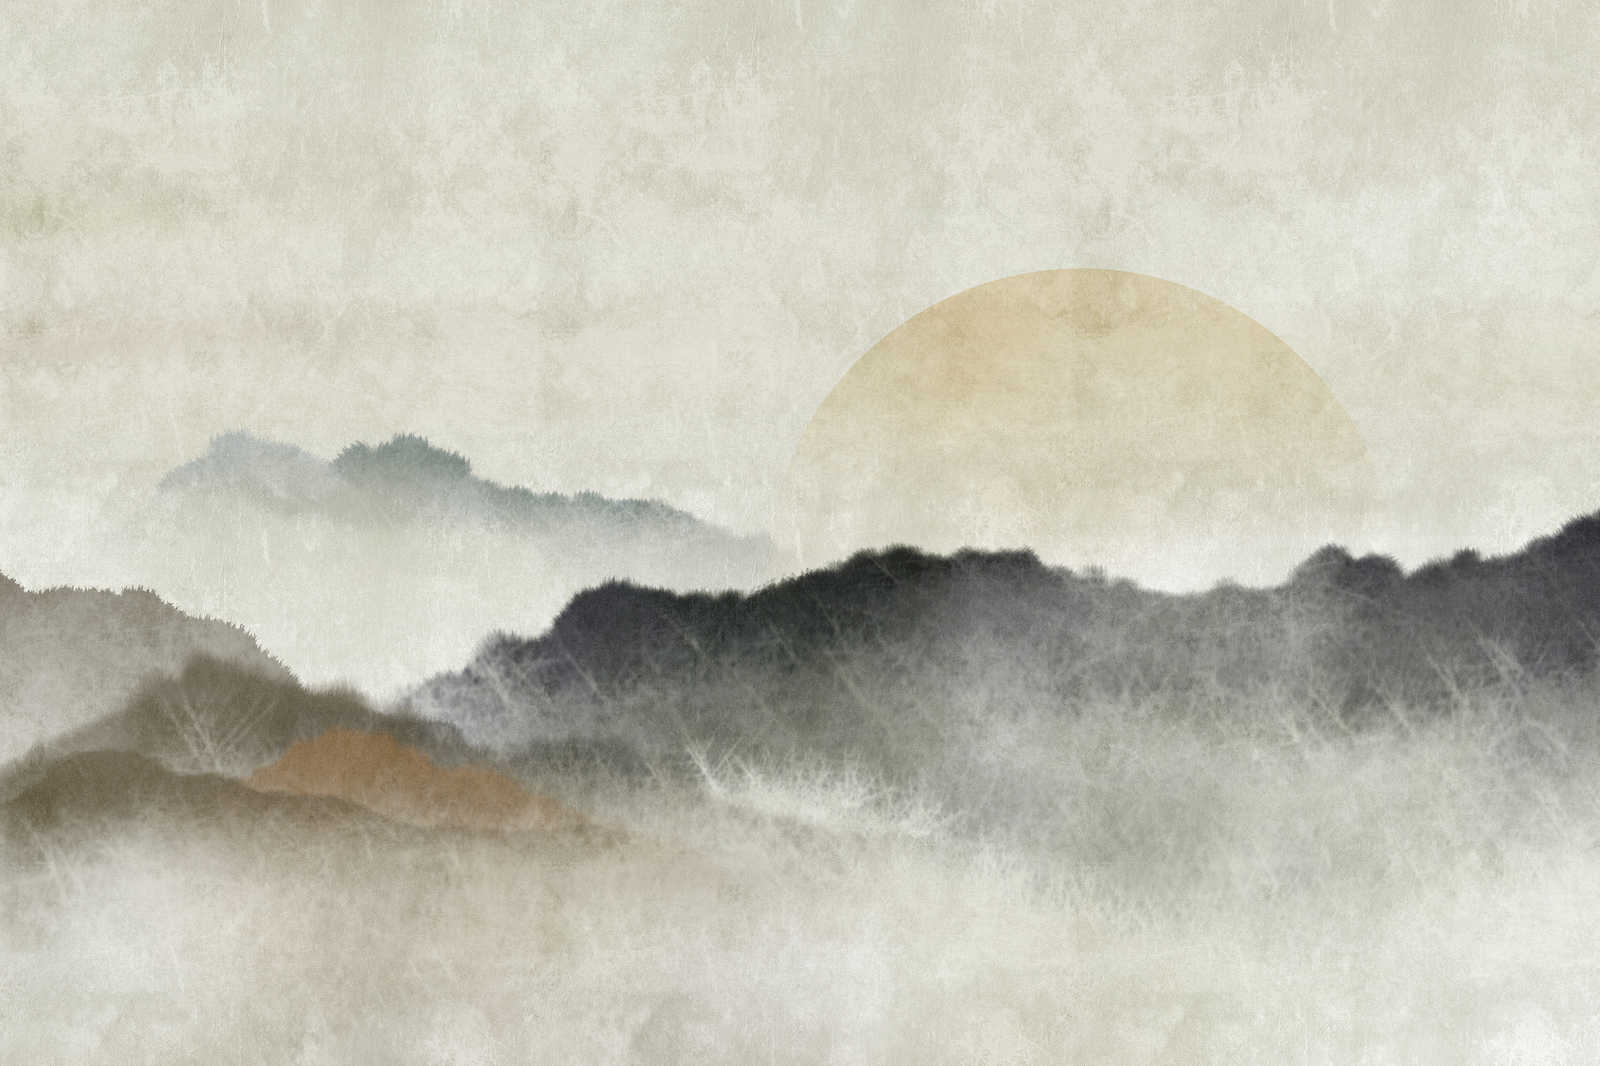             Akaishi 1 - Canvas painting Asian Print Mountain Range in Dawn - 1.20 m x 0.80 m
        